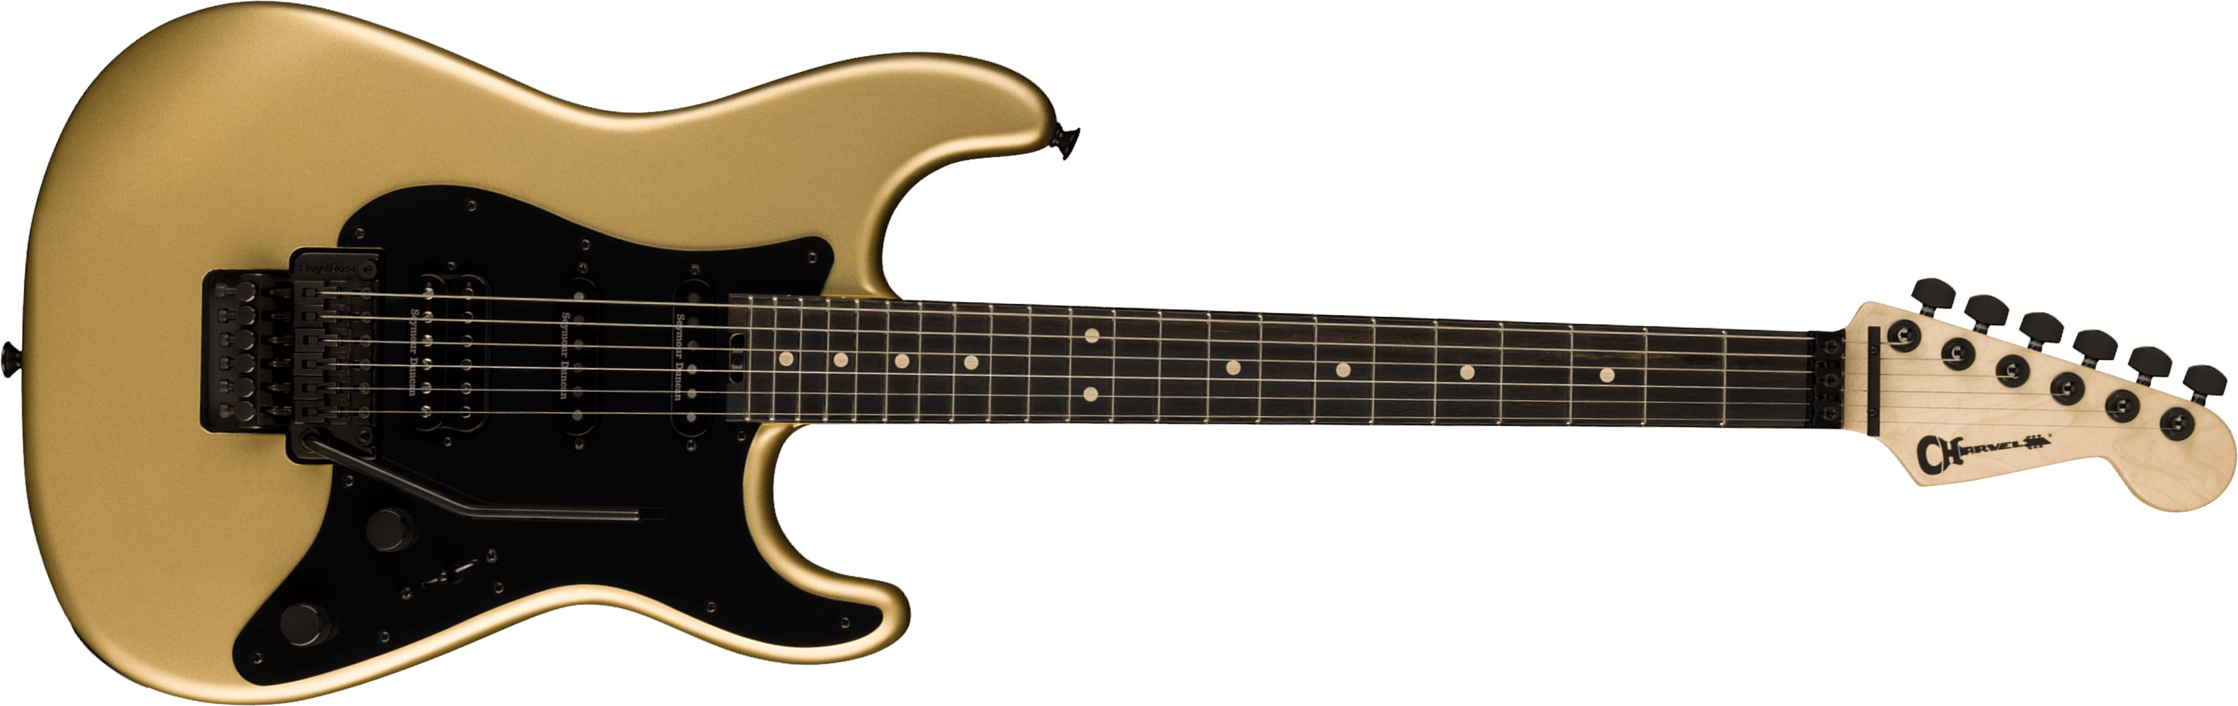 Charvel So-cal Style 1 Hss Fr E Pro-mod Seymour Duncan Eb - Pharaohs Gold - Str shape electric guitar - Main picture